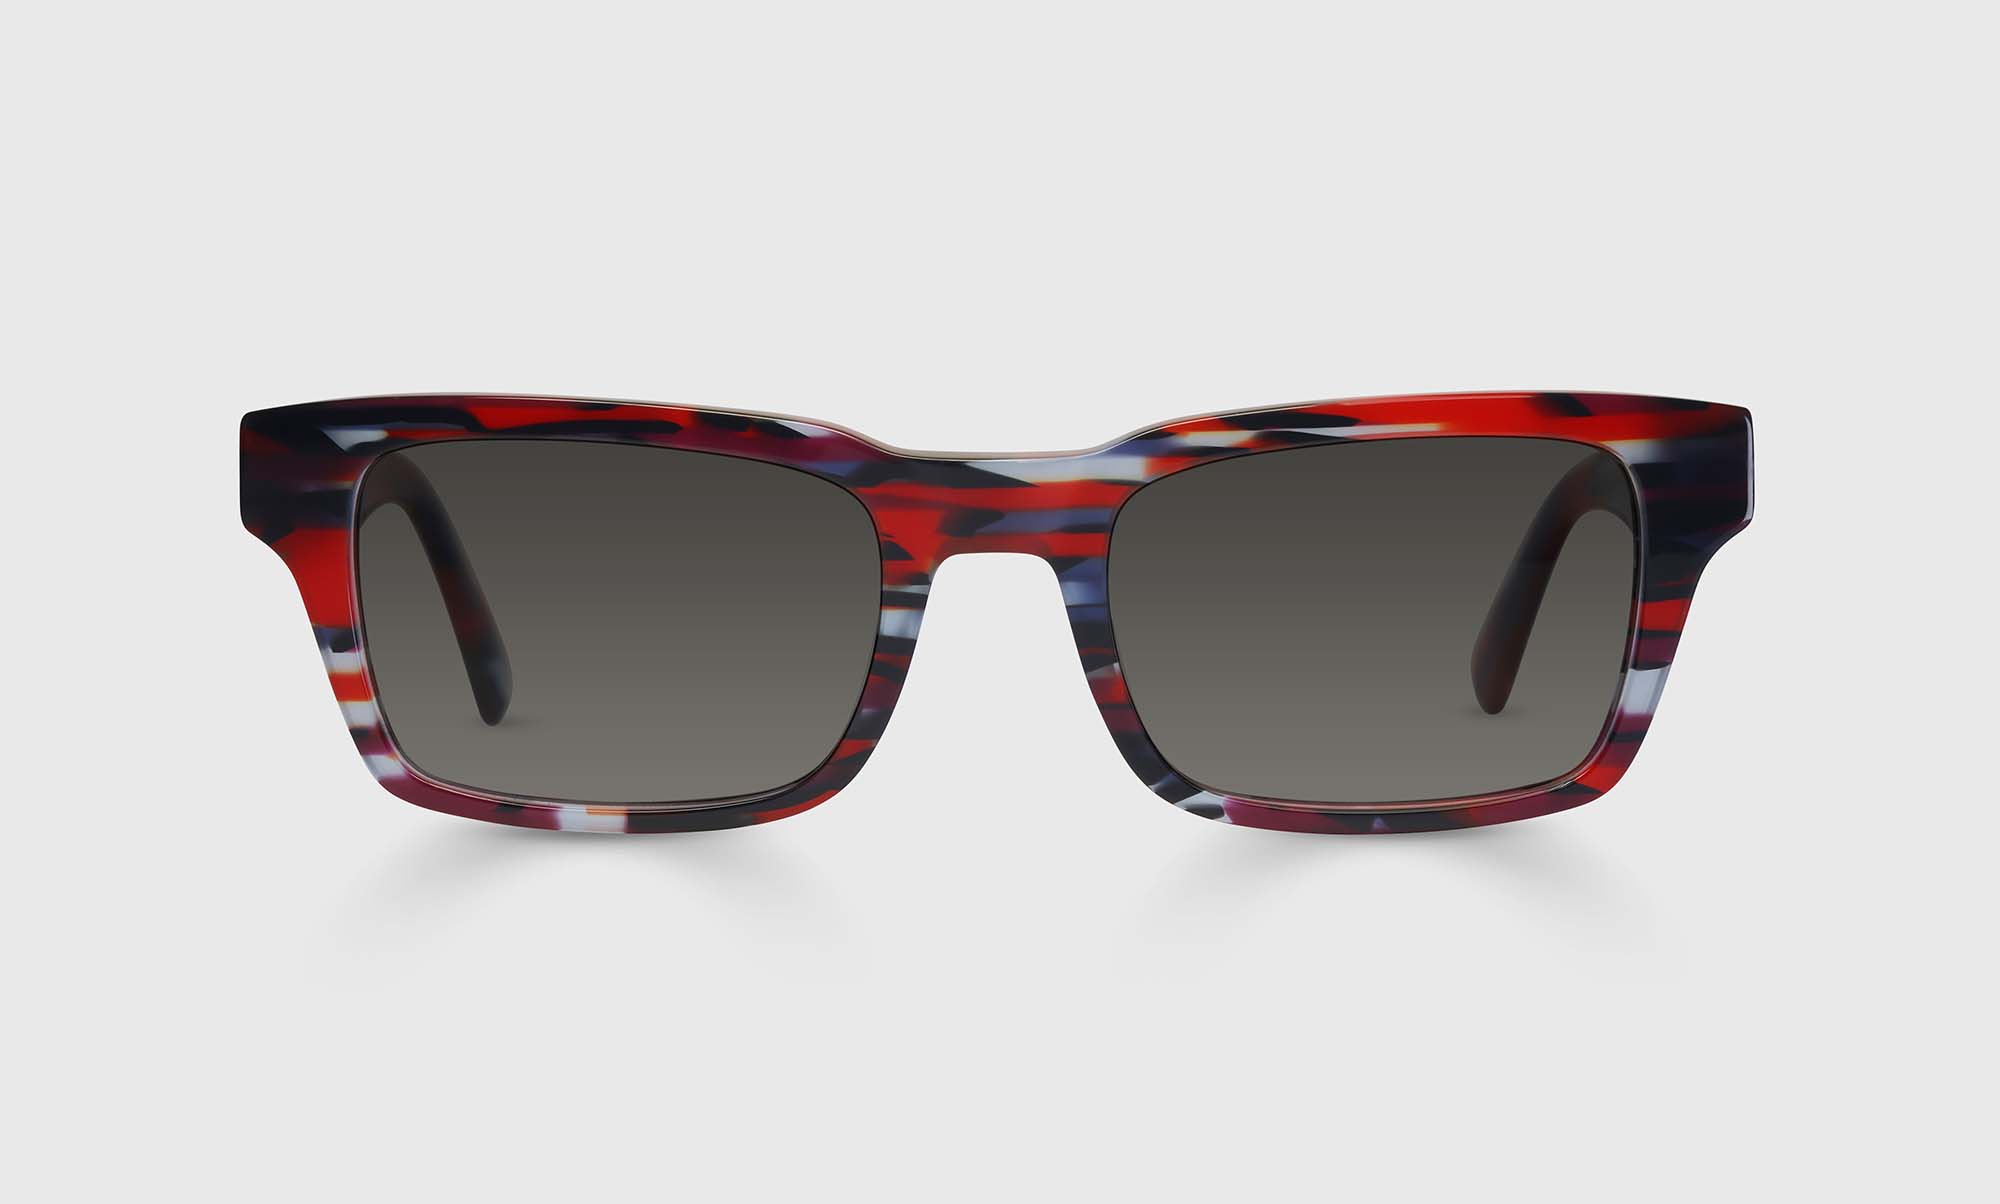 01-pg | eyebobs Fare N Square, Wide, Square, Reader Sunglasses, Polarized Grey